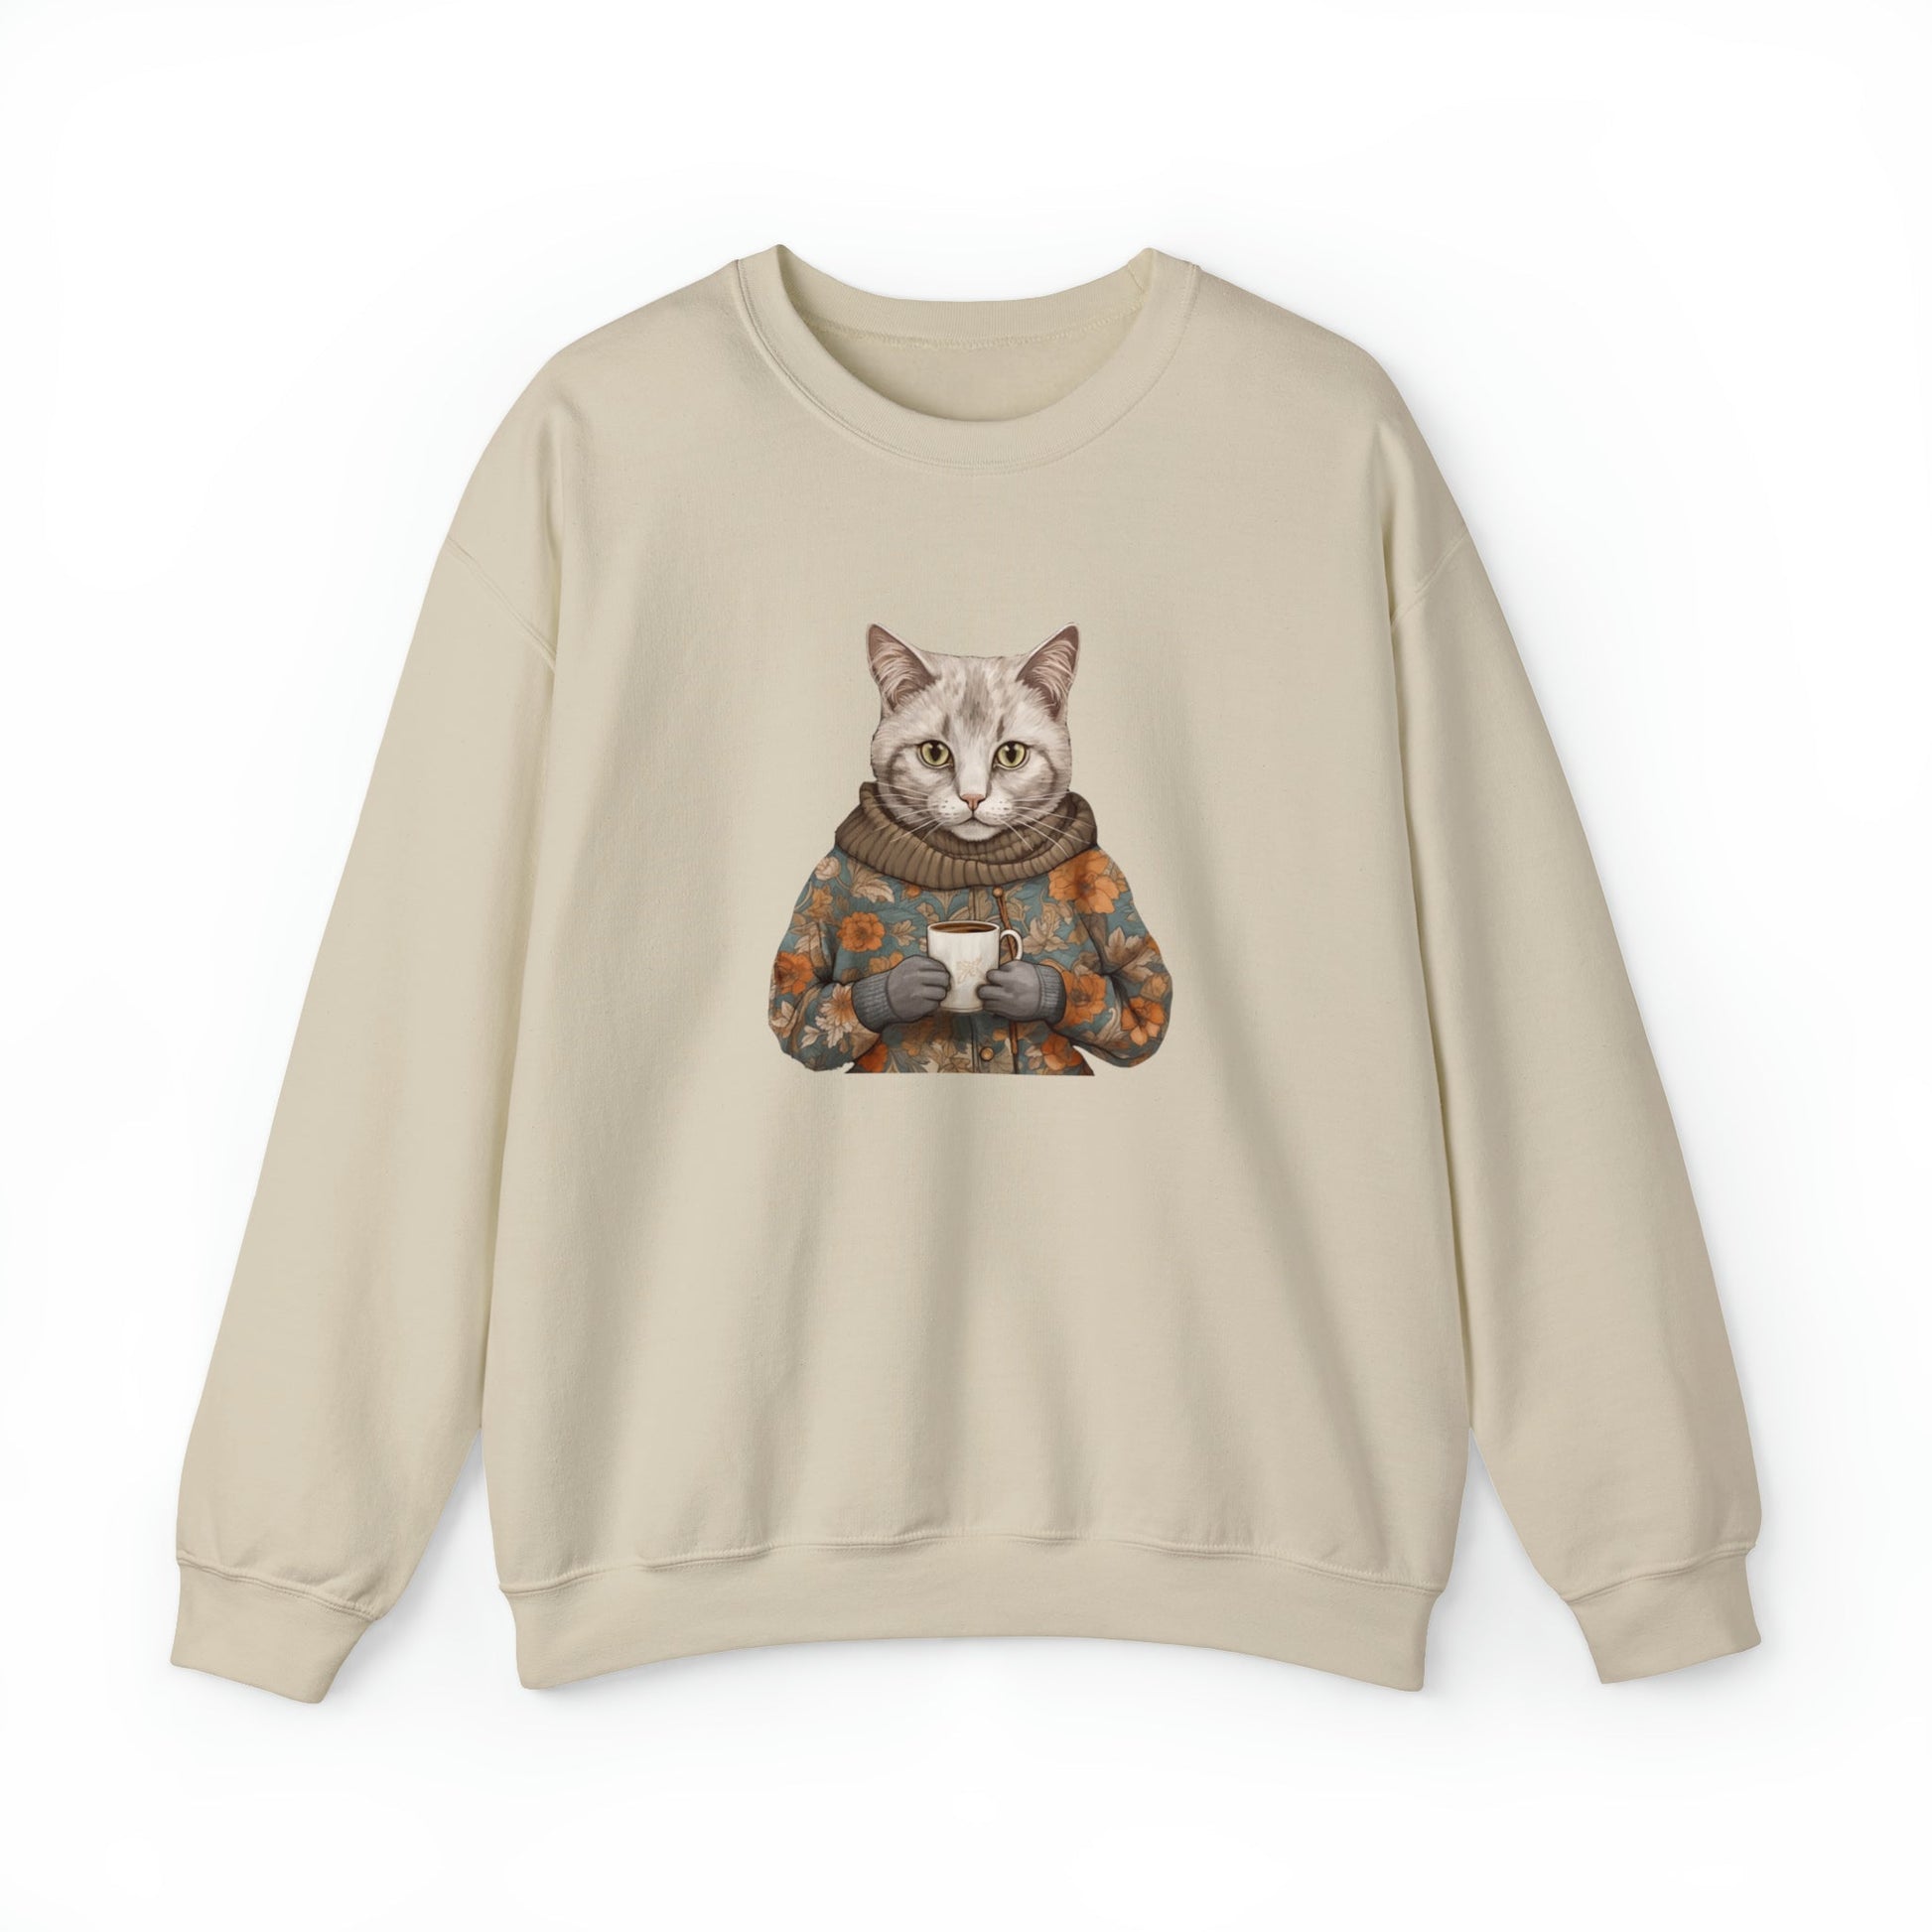 Cute Cat Sweatshirt in Sweaters Sweatshirt, Whimsical Artistic Illustration - FlooredByArt